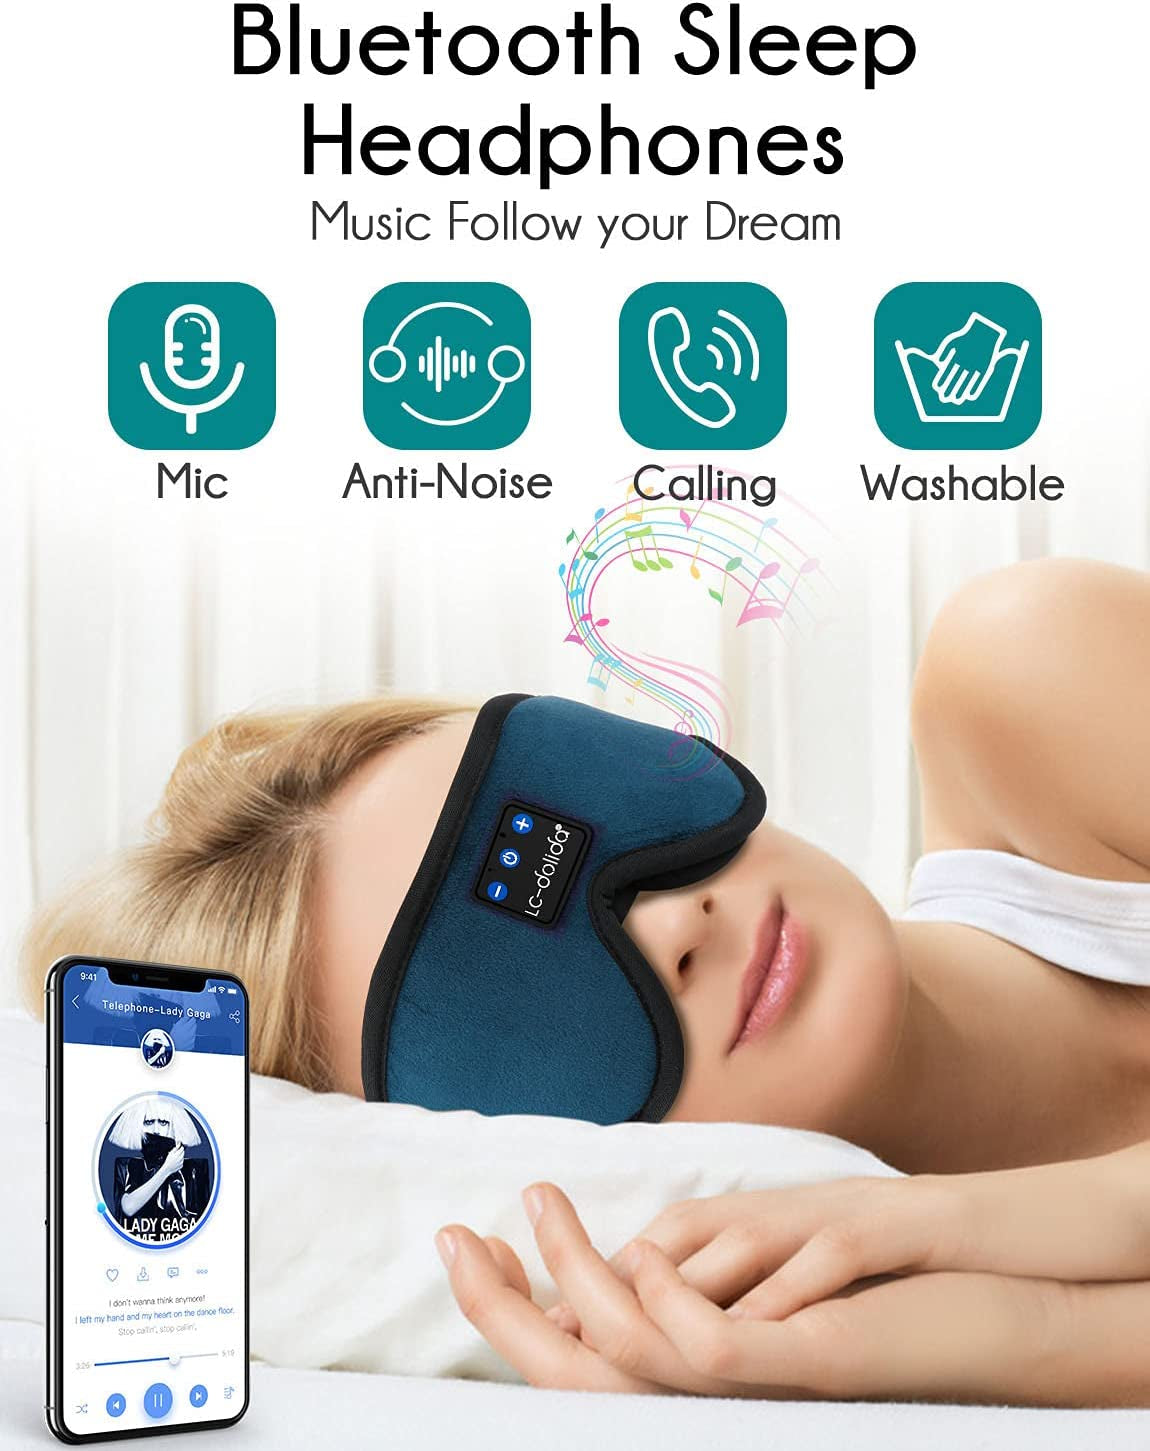 Sleeping Headphones Eye Mask, Sleep Mask with Bluetooth Headphones 3D Eye Mask Wireless Music Cotton Sleep Cover for Side Sleepers Nap Insomnia Air Travel Meditation Gifts for Unisex